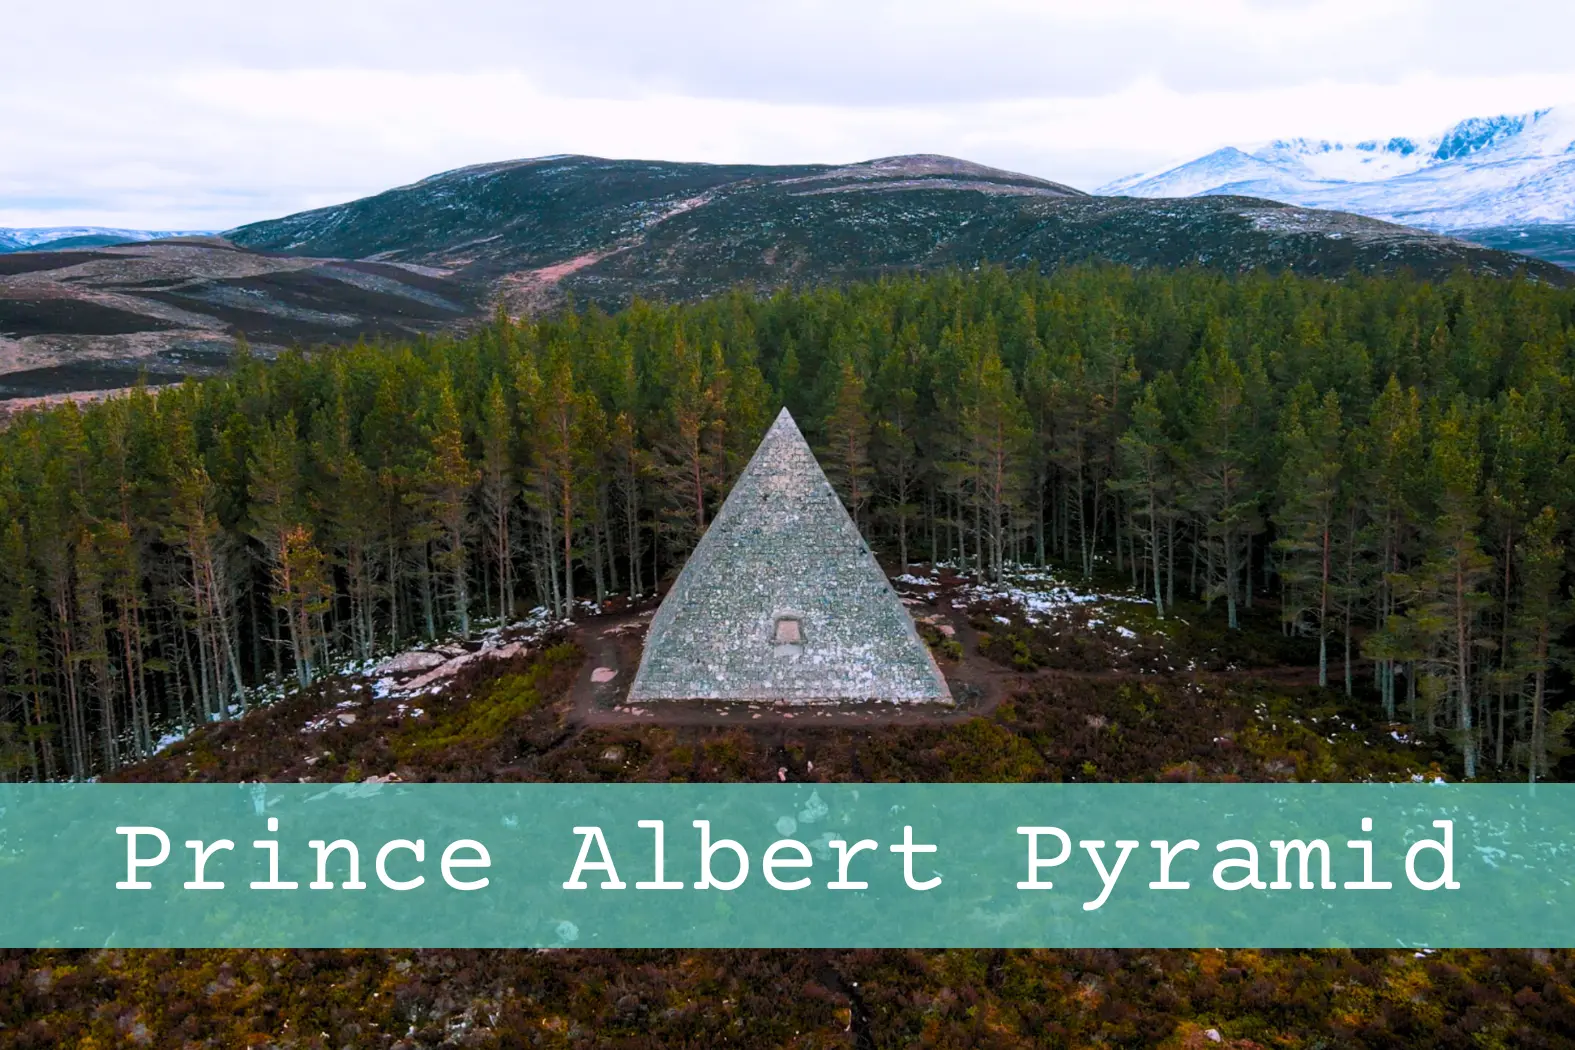 Prince Albert Pyramid